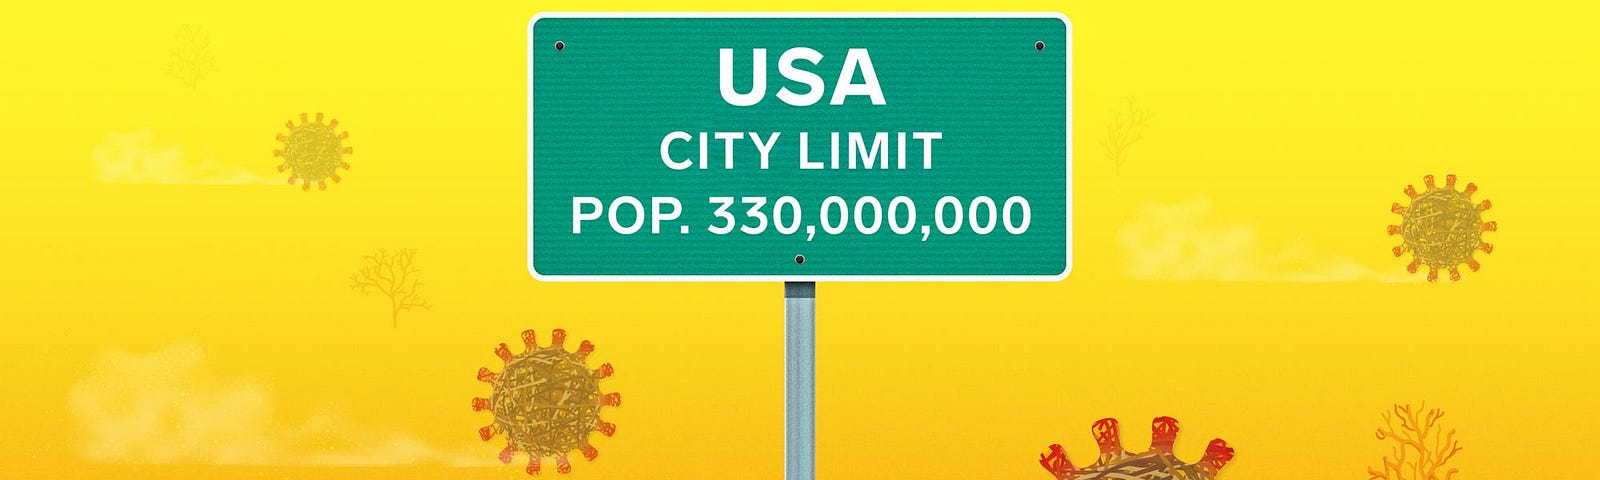 A sign that reads, “USA CITY LIMIT POP. 330,000,000.”